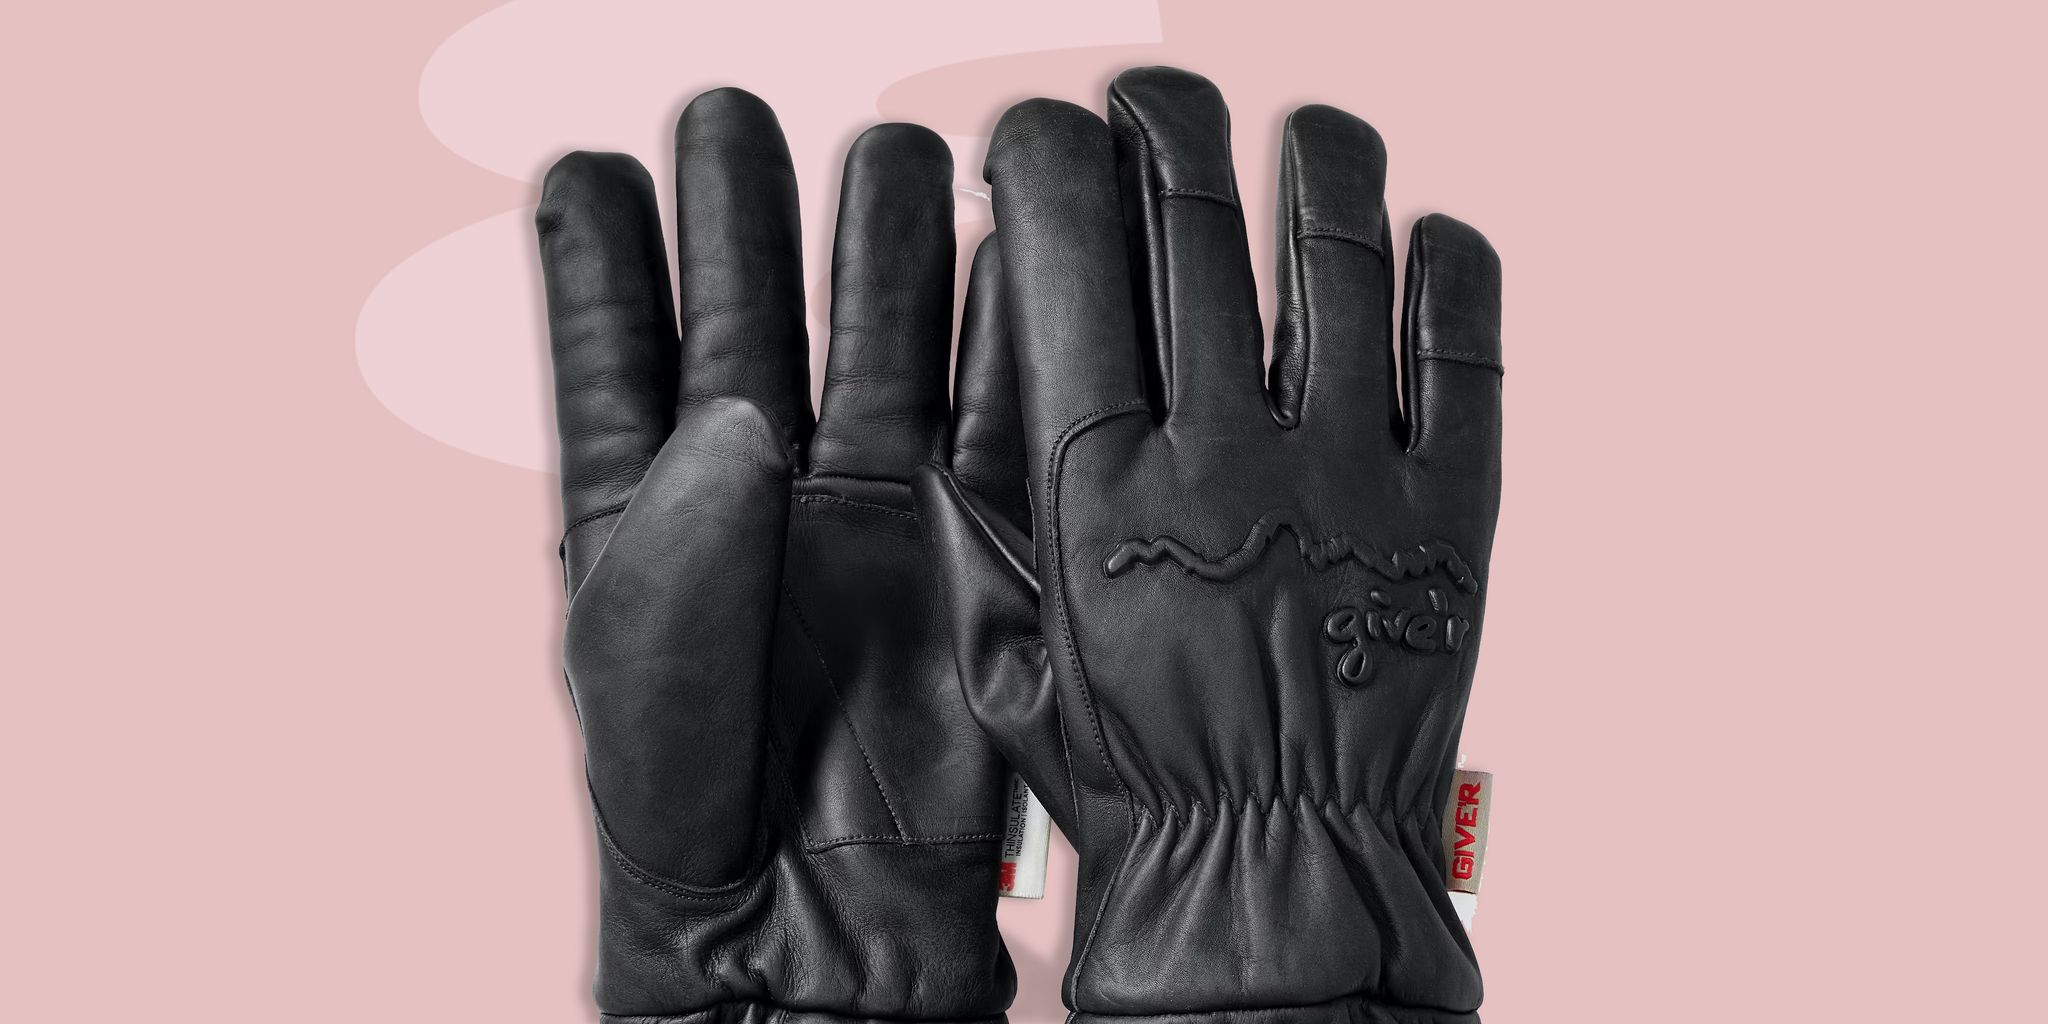 14 Best Safety Work Gloves for Men in 2023